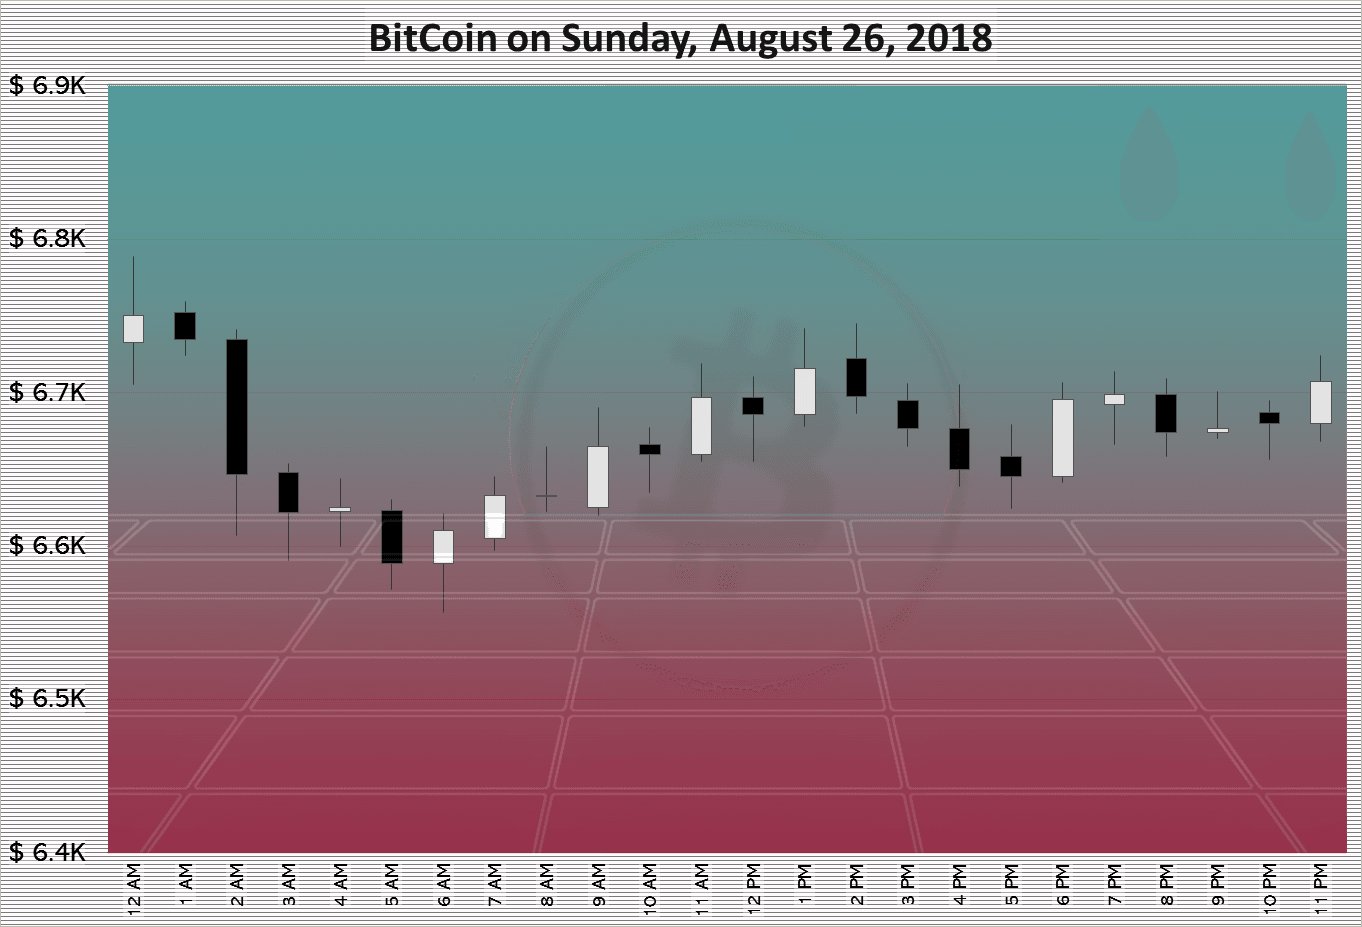 BitCoin on Sunday, August 26, 2018